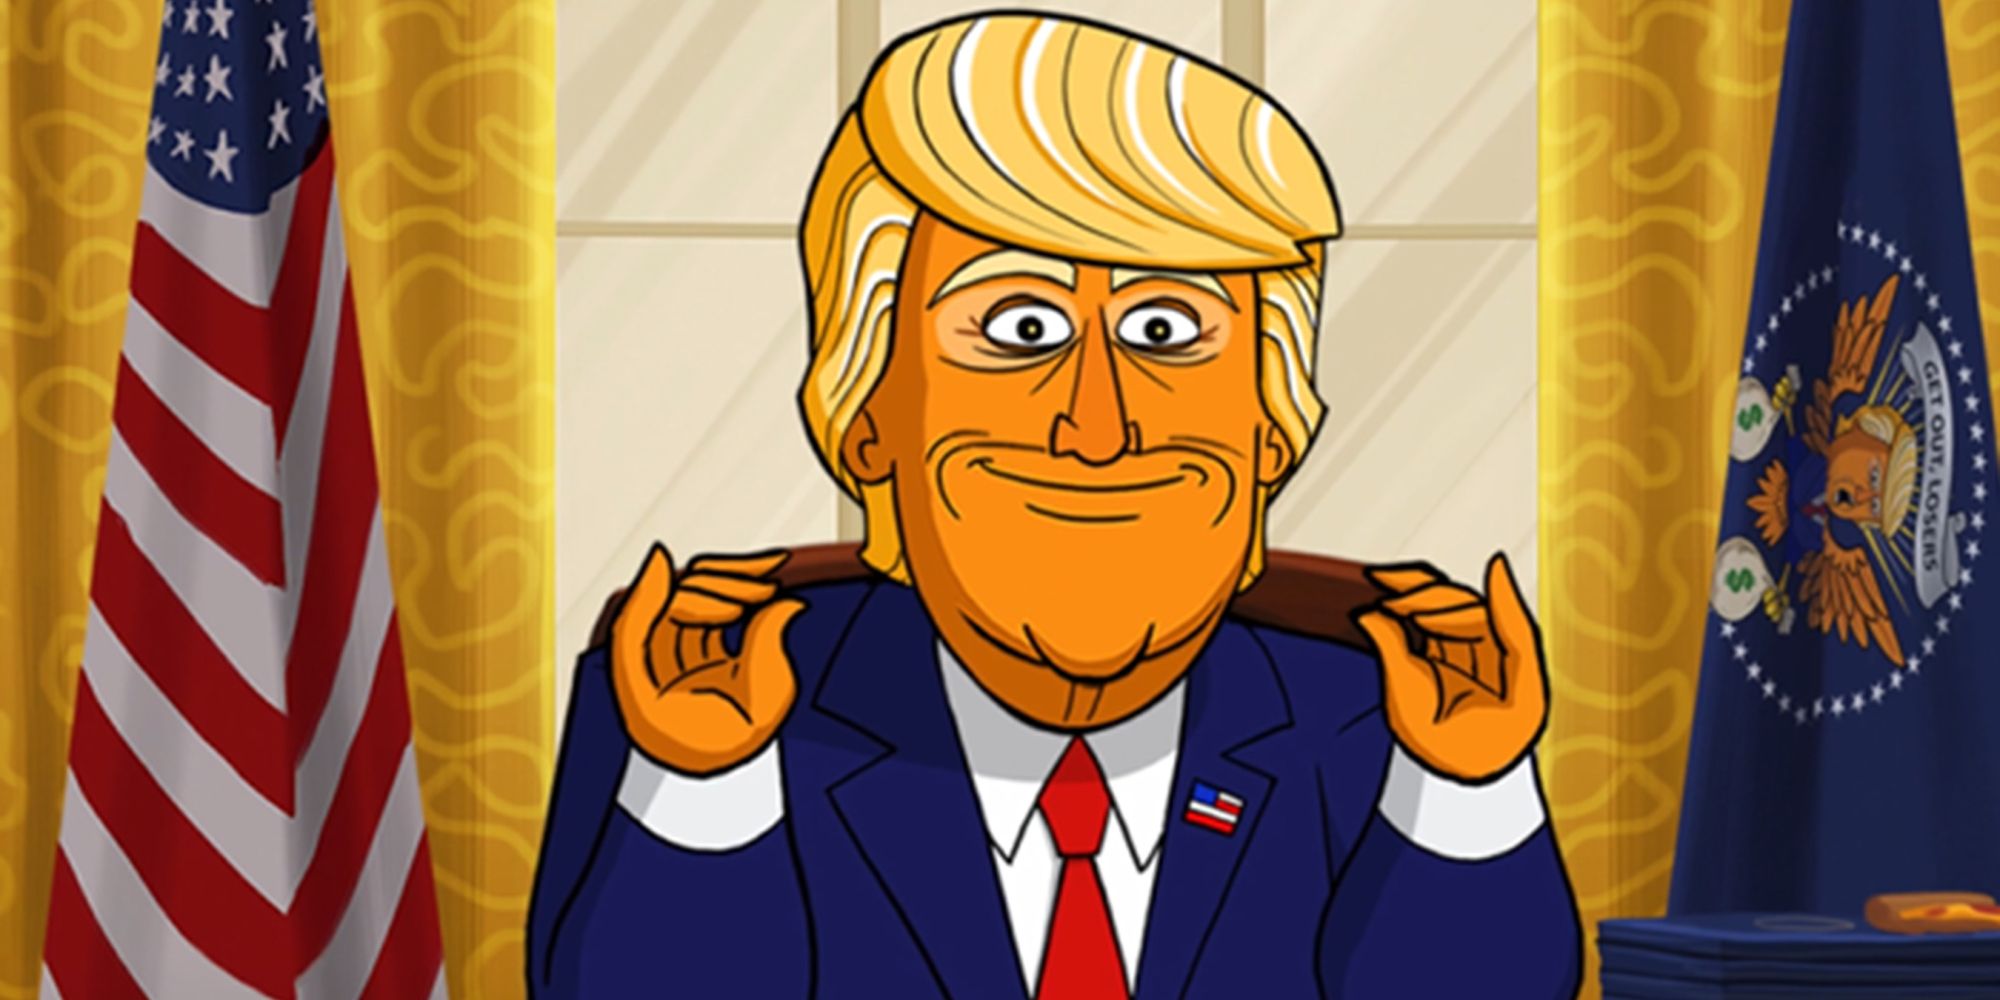 Trump Animated Showtime